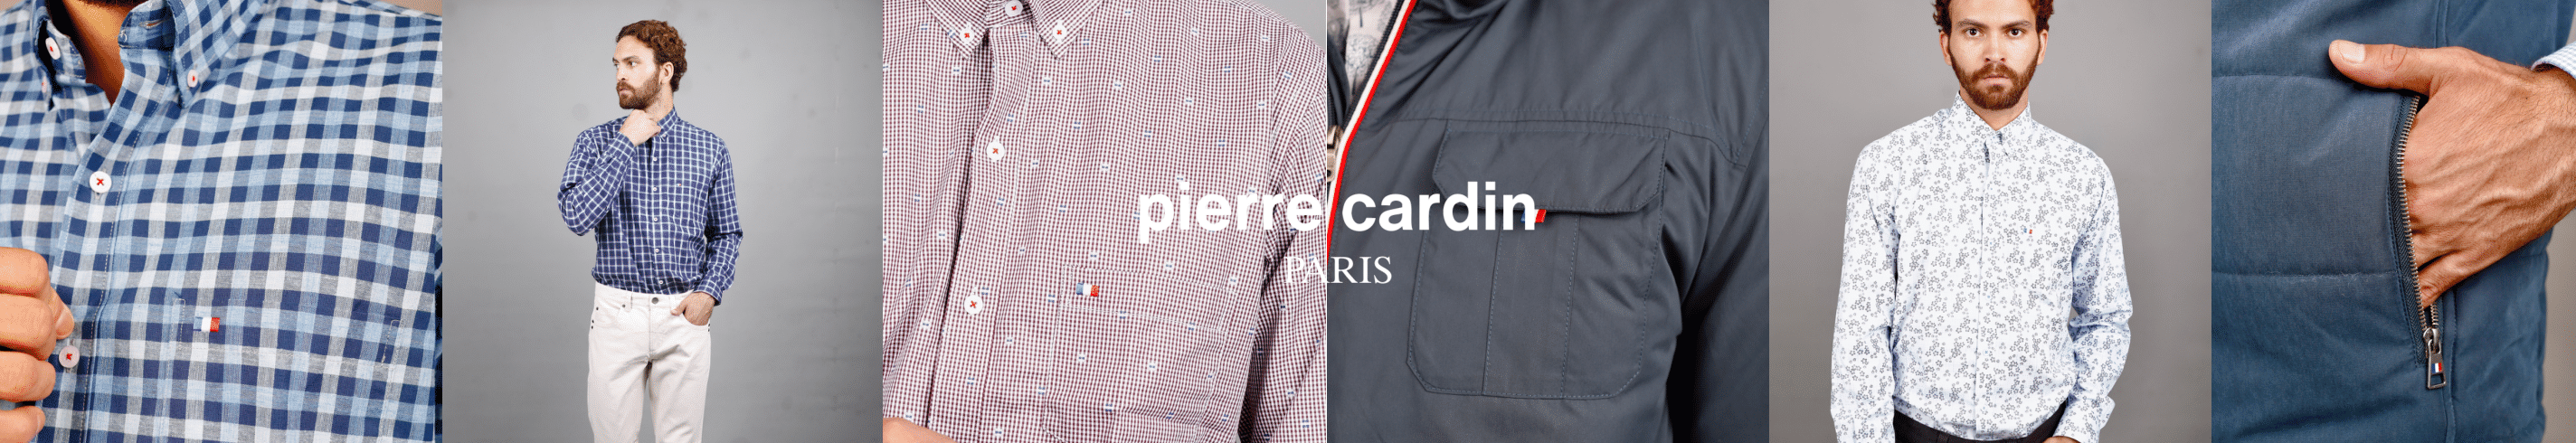 Banner Pierre Cardin